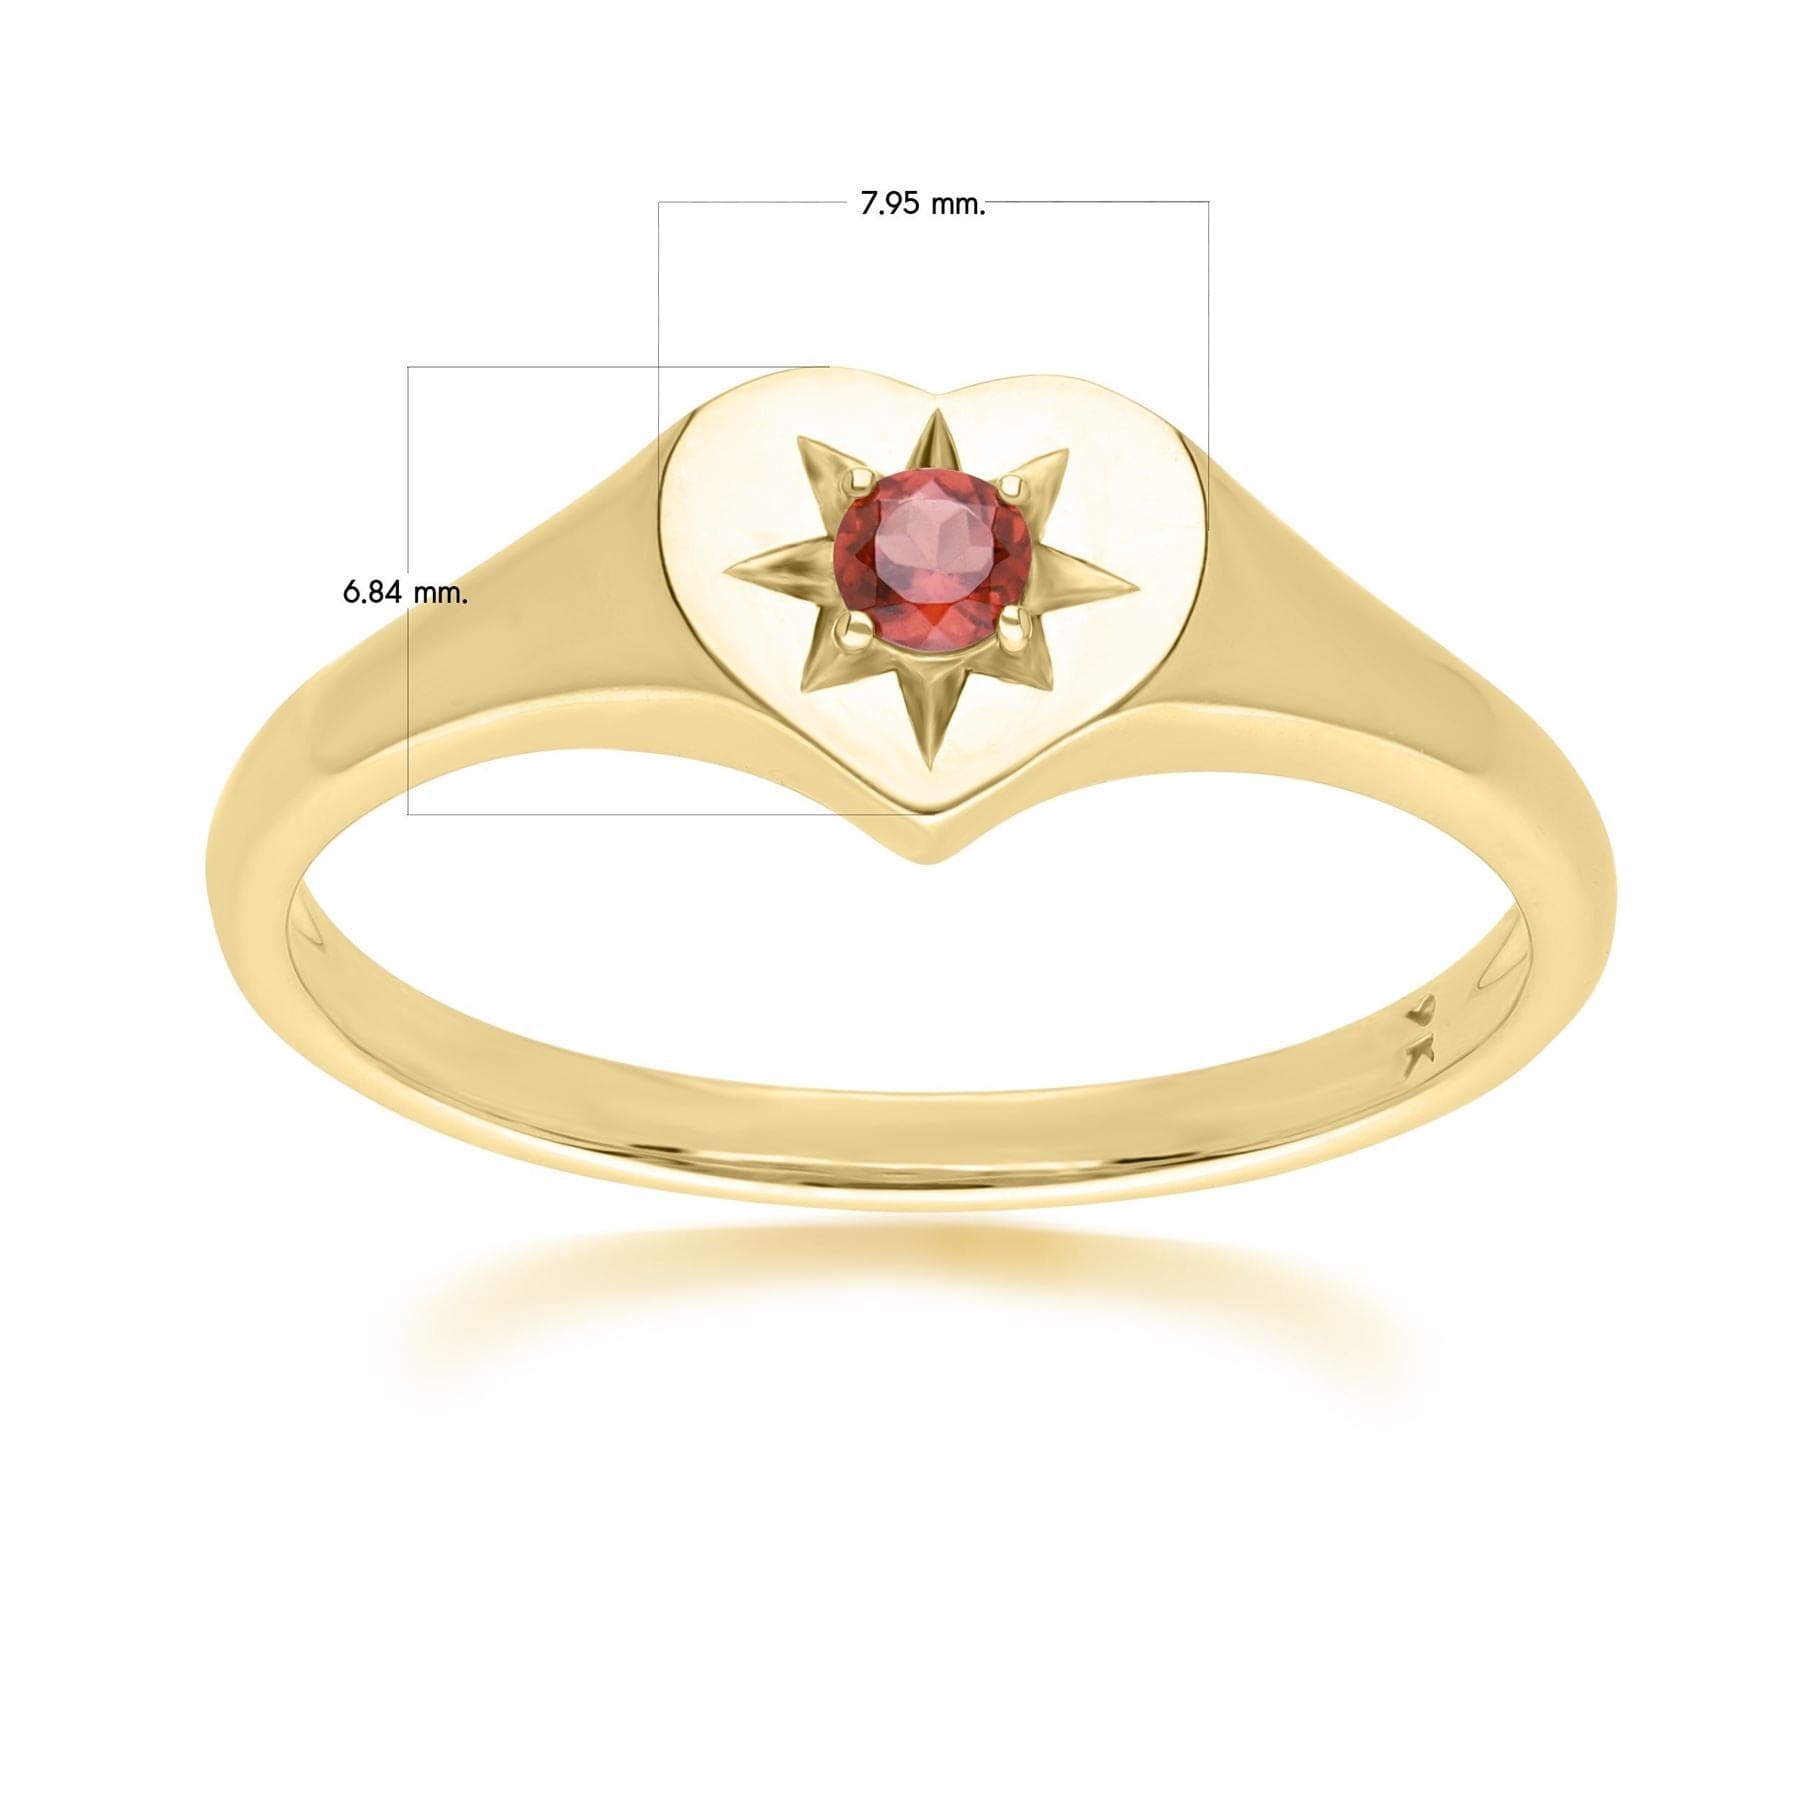 ECFEW™ 'The Liberator' Garnet Heart Ring in 9ct Yellow Gold - Gemondo